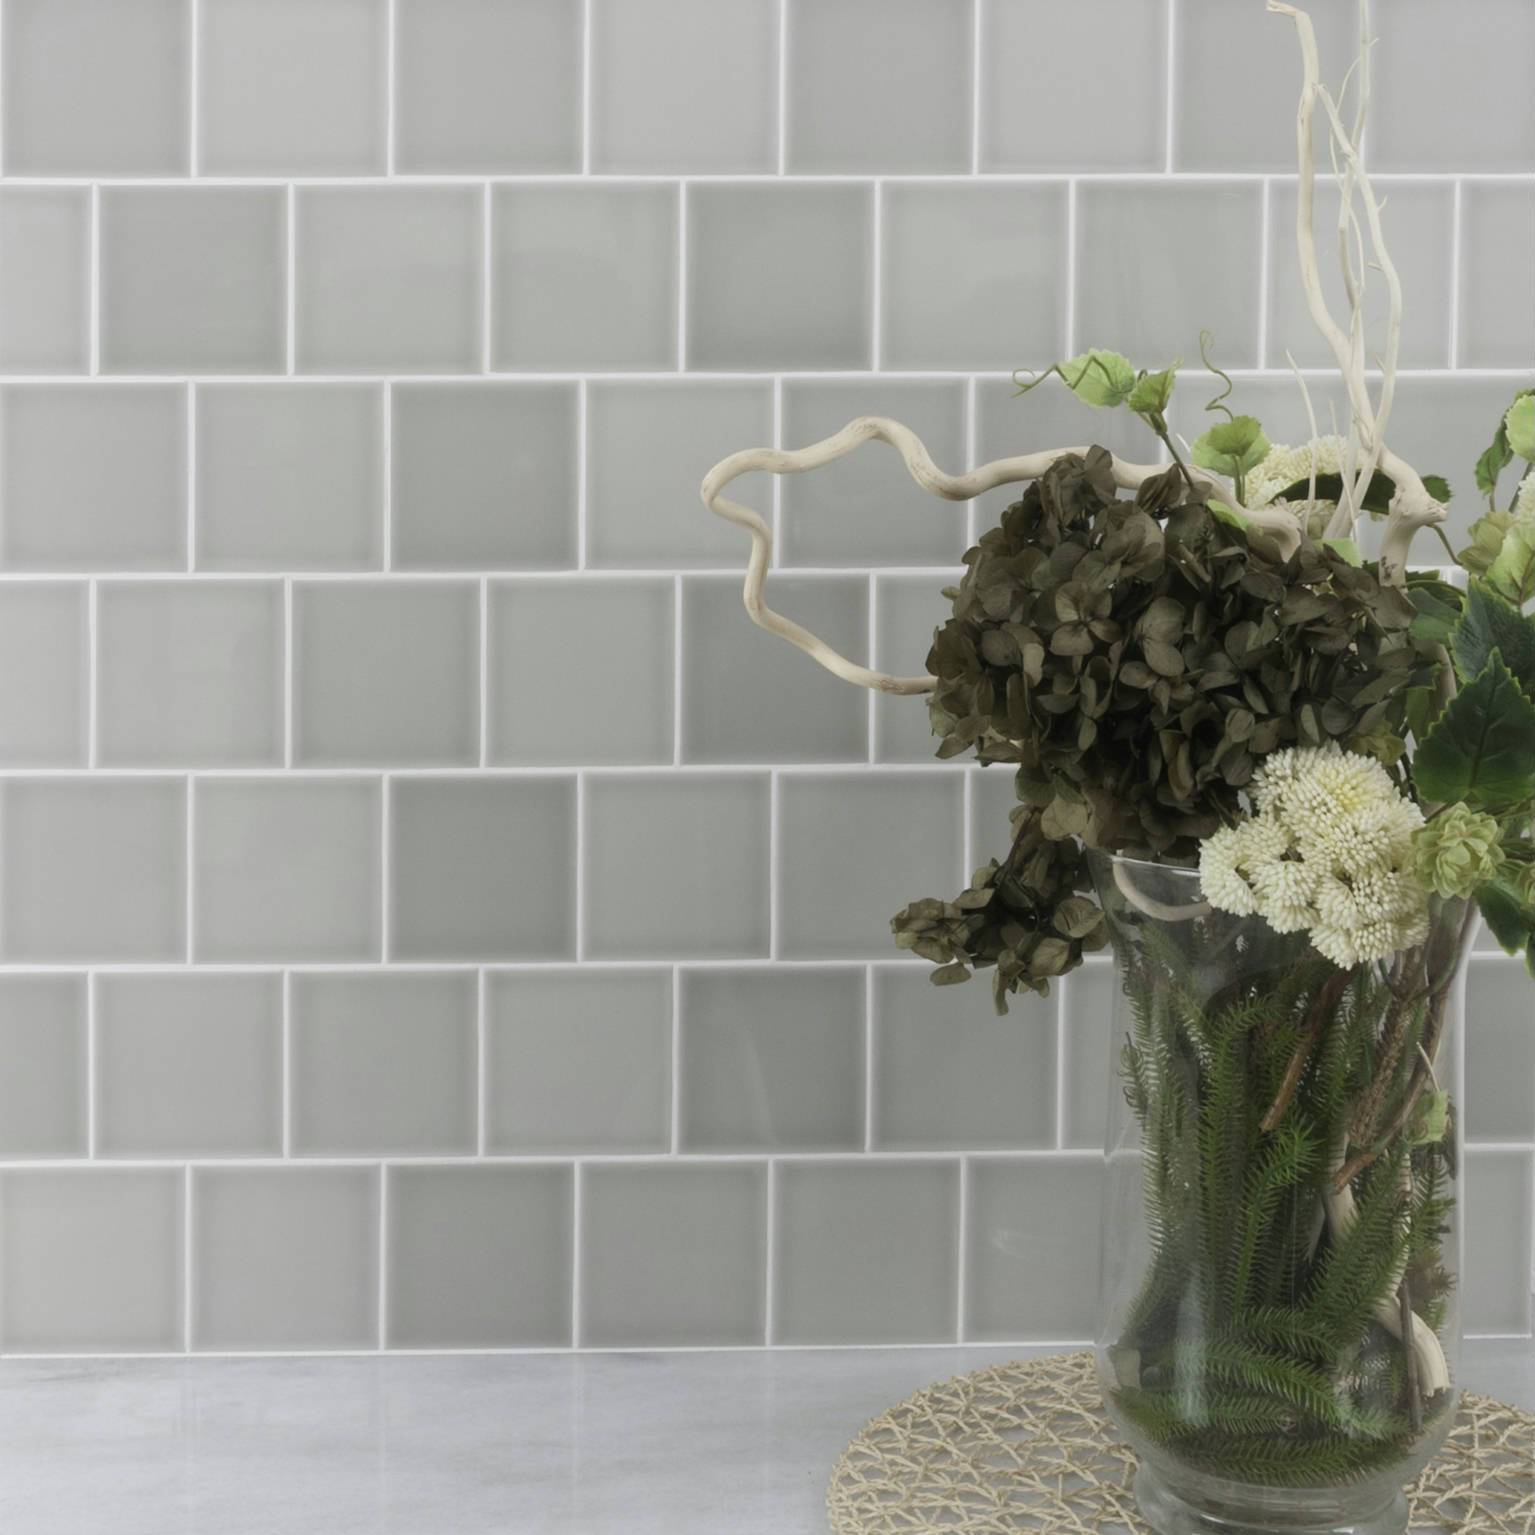 gray ceramic tile wall covering in restaurant interior